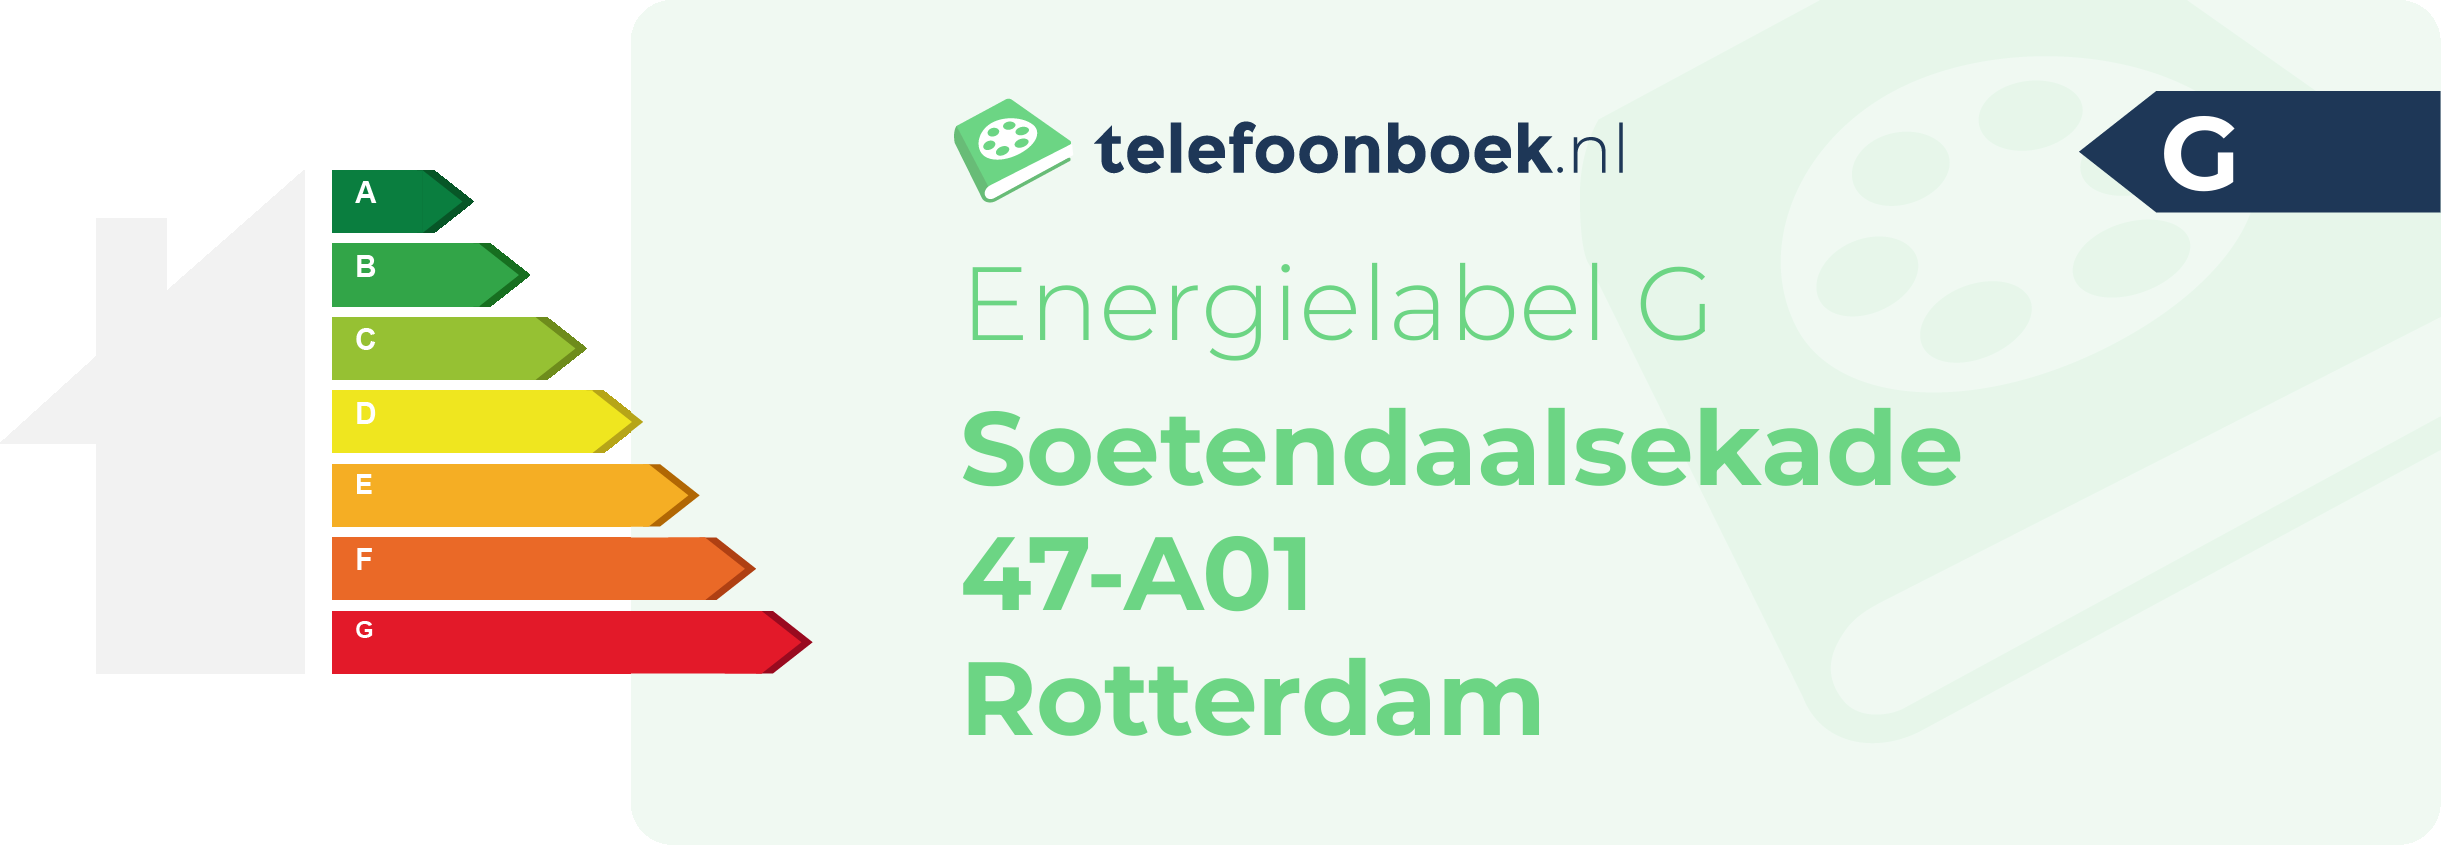 Energielabel Soetendaalsekade 47-A01 Rotterdam